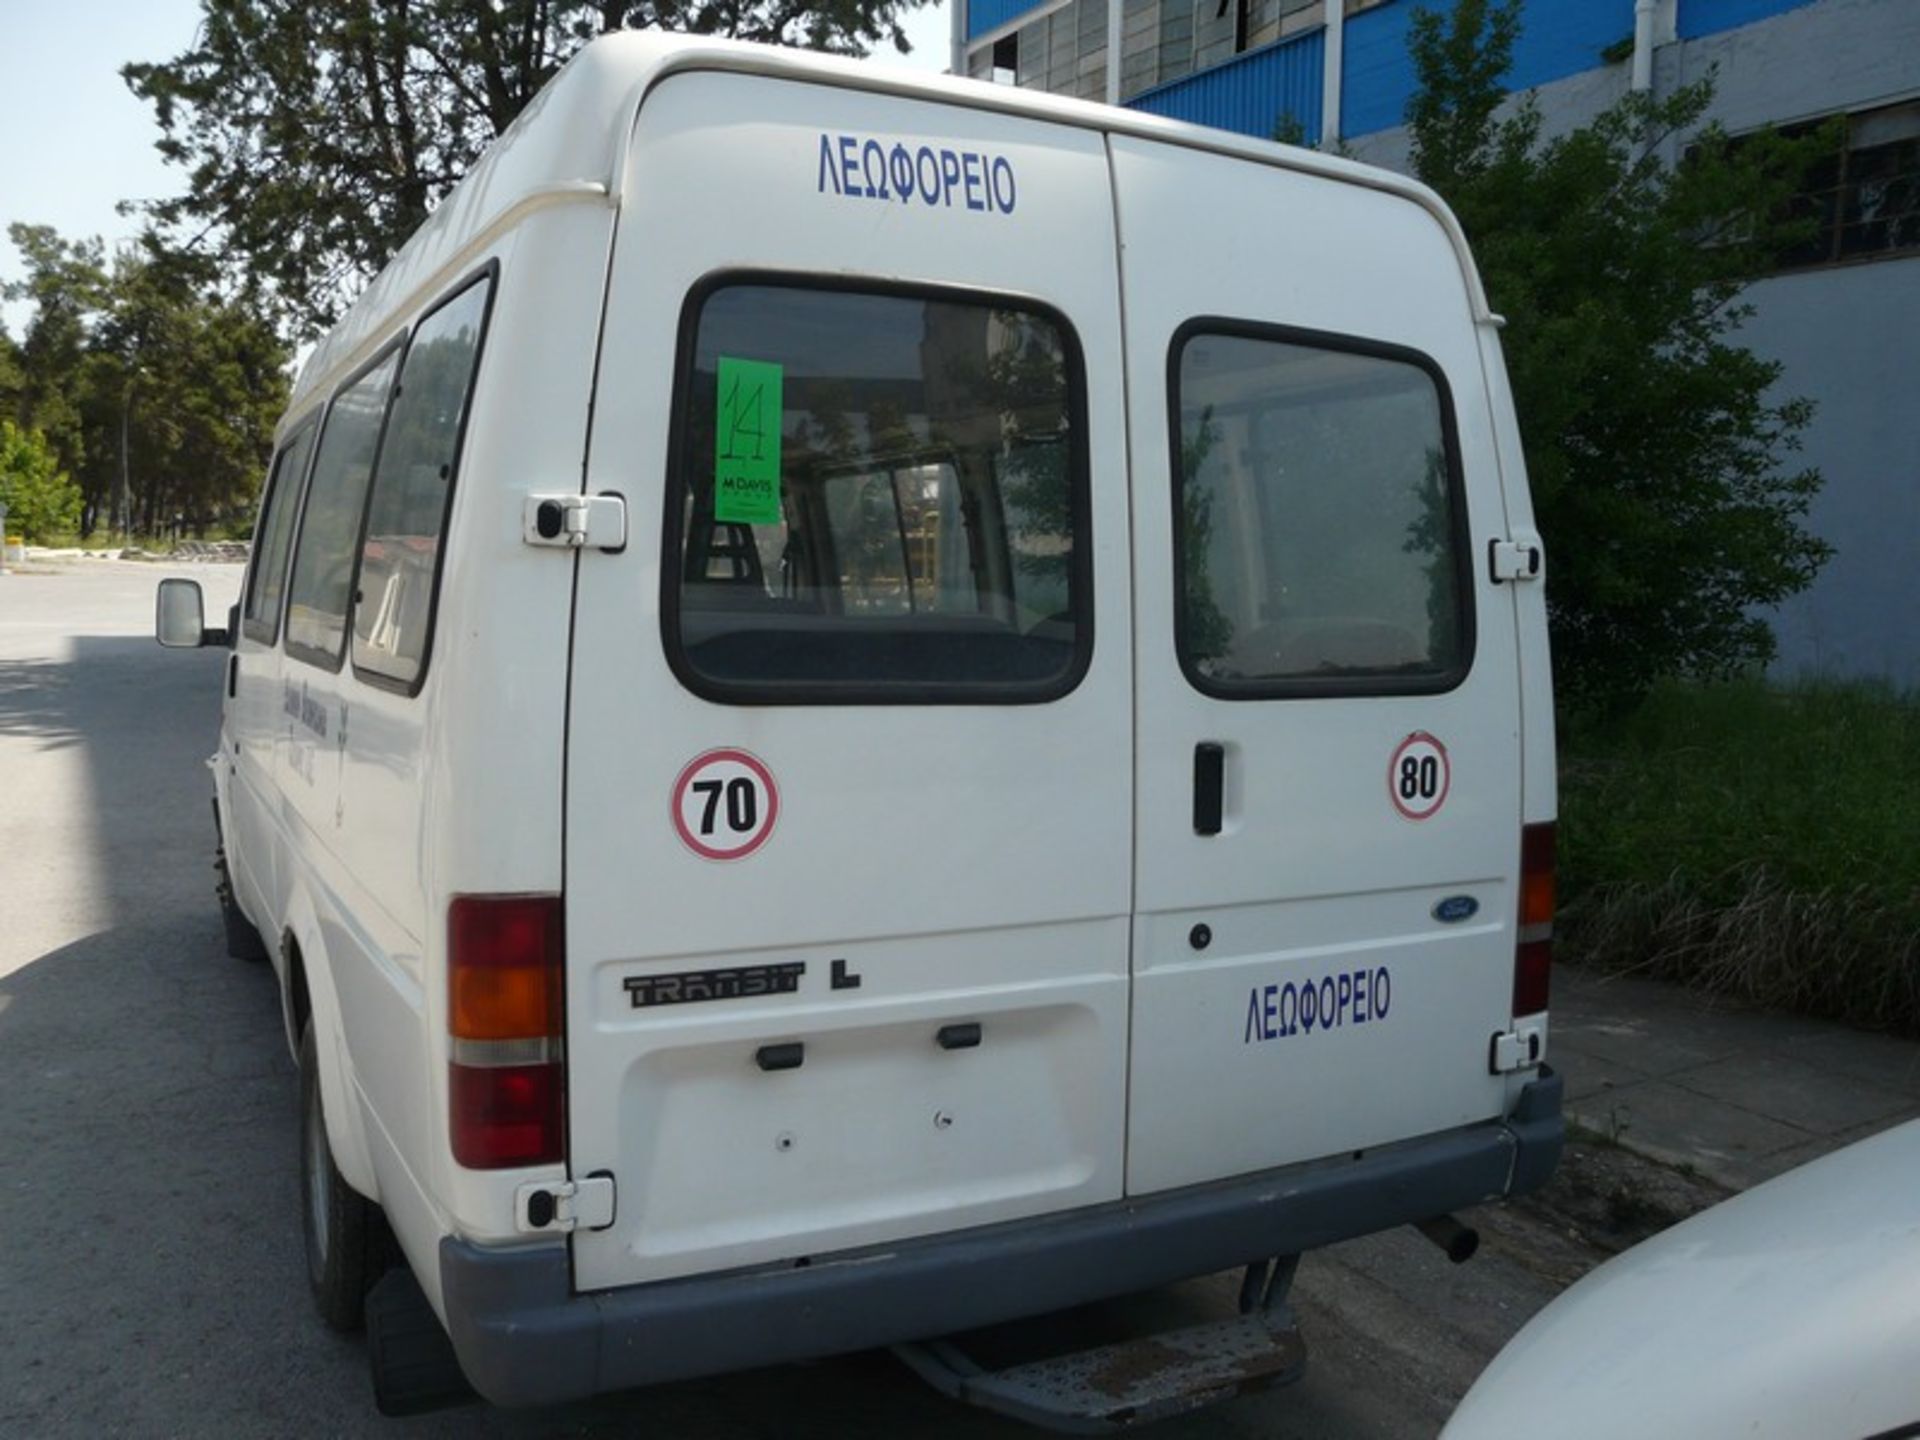 FORD TRANSIT, bus115, diesel, KM 212503, 14+1 seats, REG NBB 8161, Year: 1991 (Located in Greece - - Bild 5 aus 10